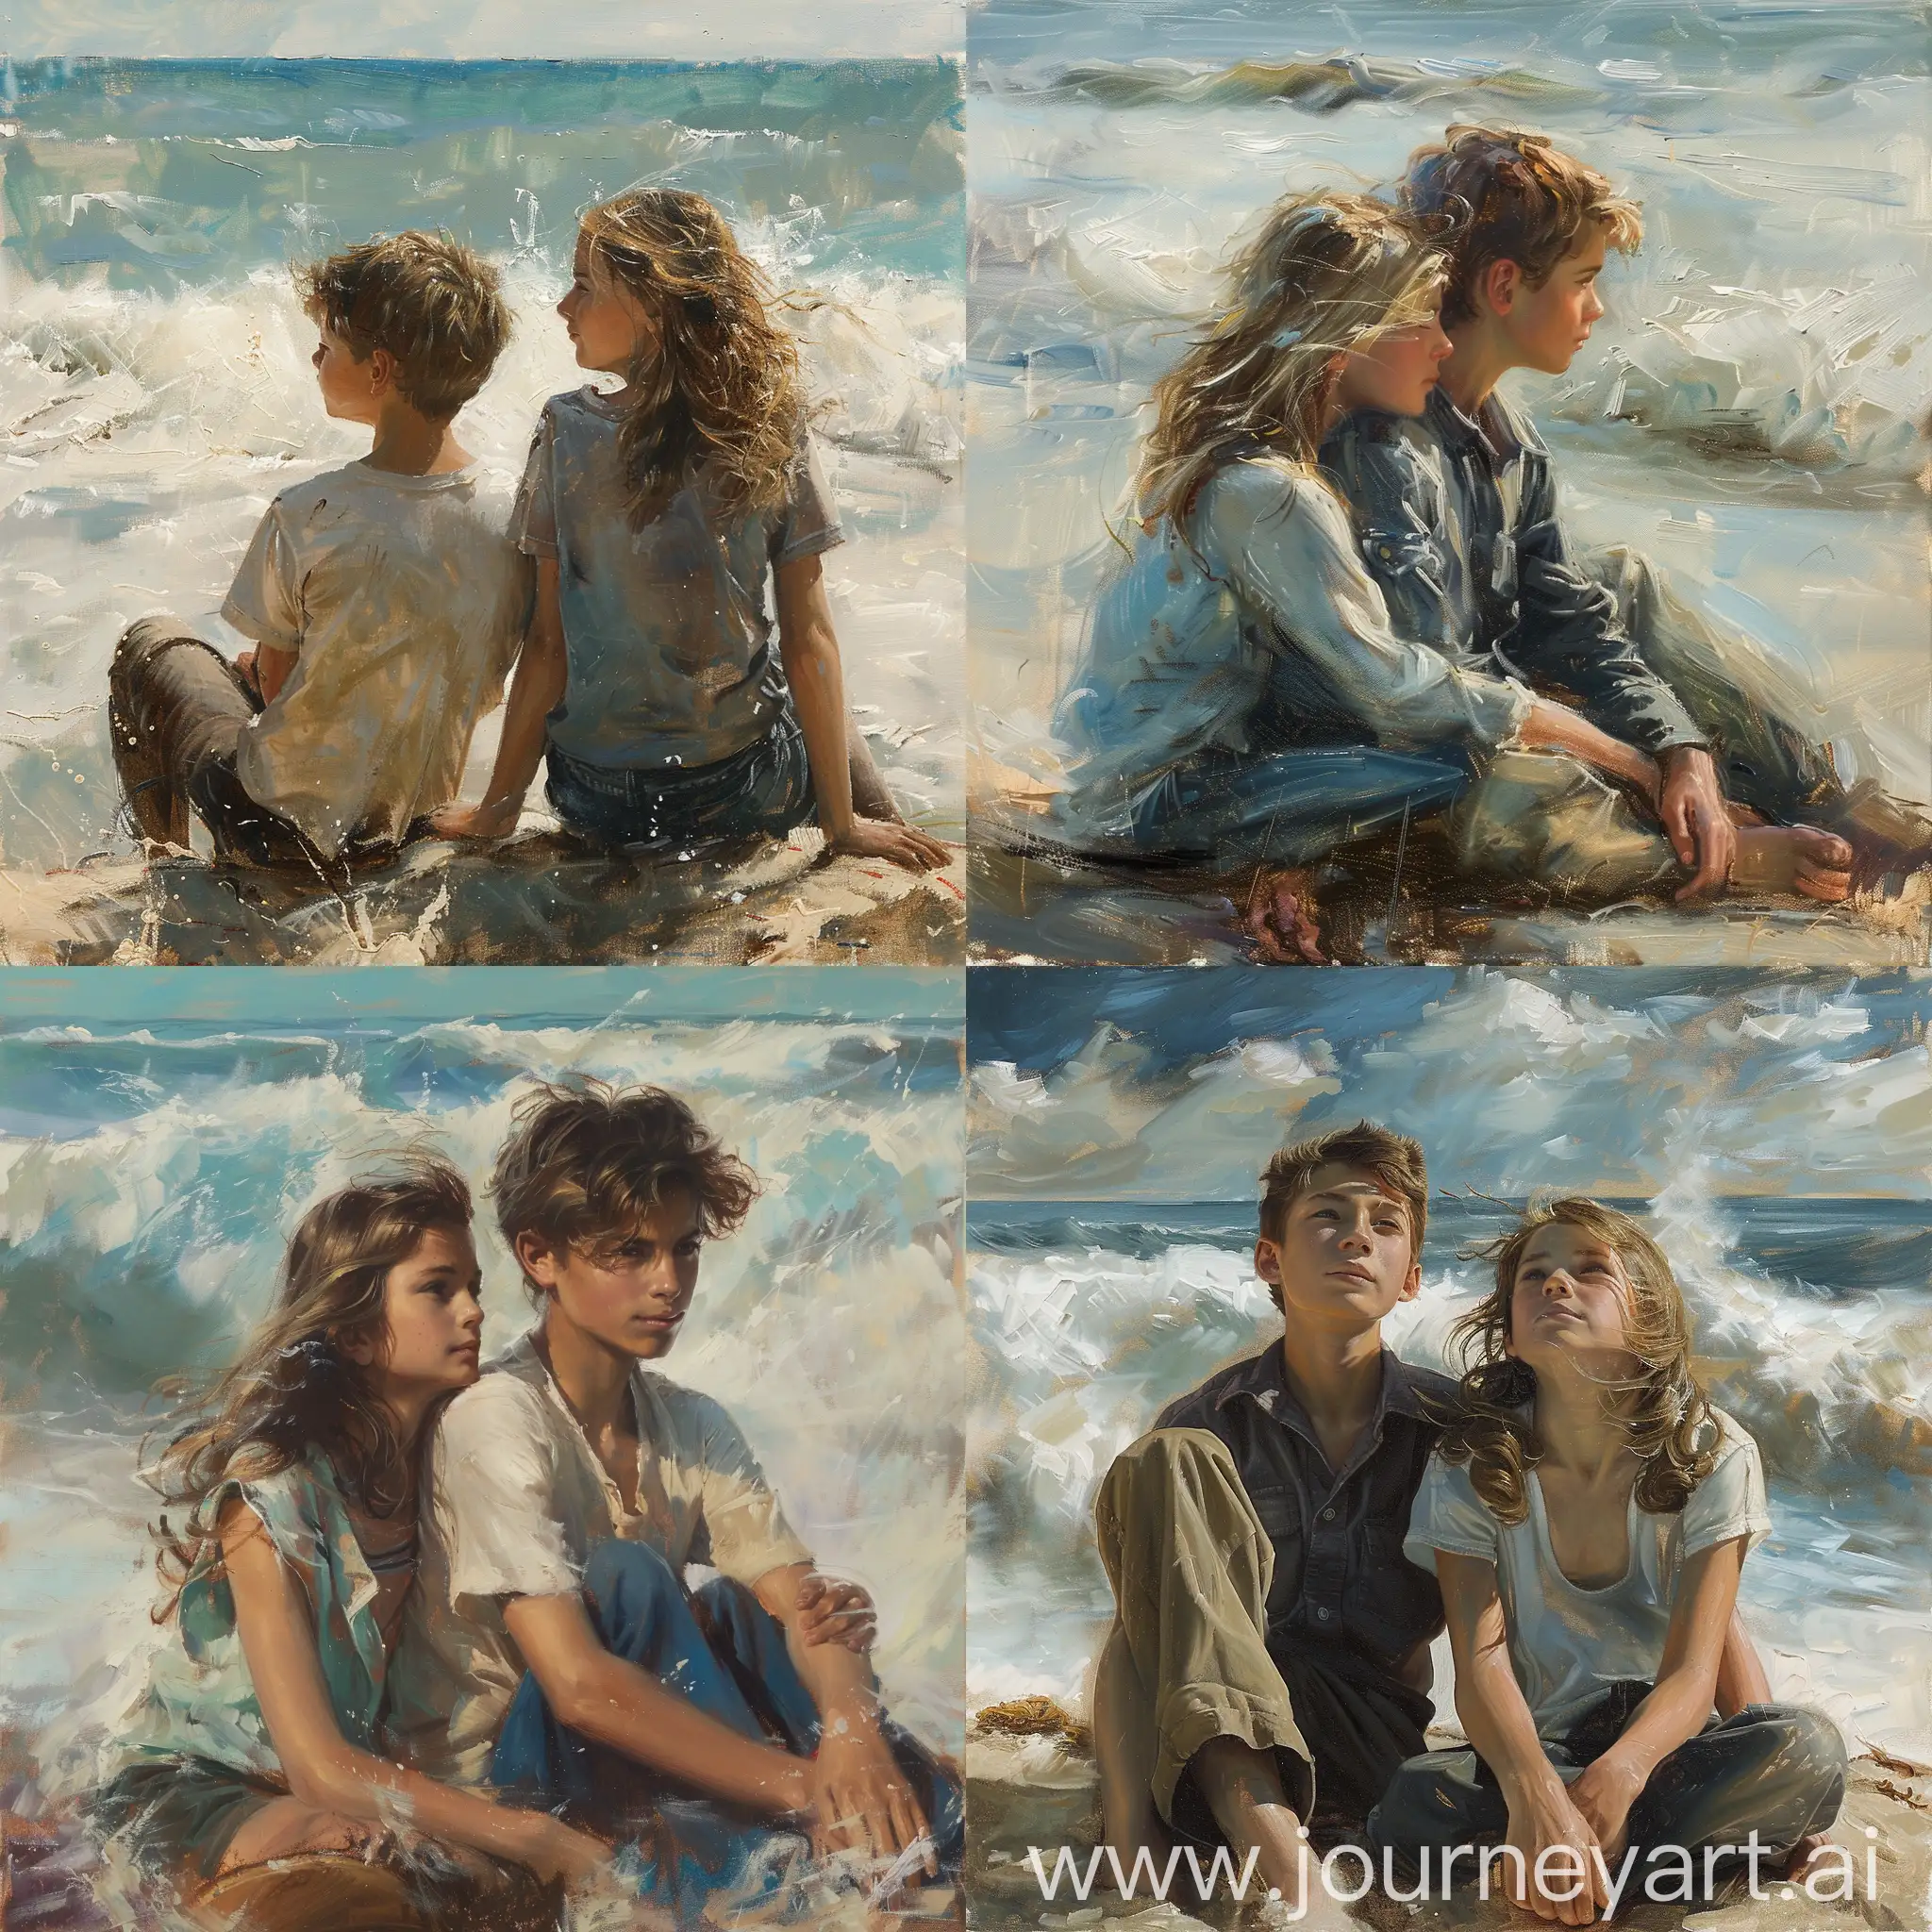 Serene-Beachside-Bonding-Joyful-Children-Gazing-at-Waves